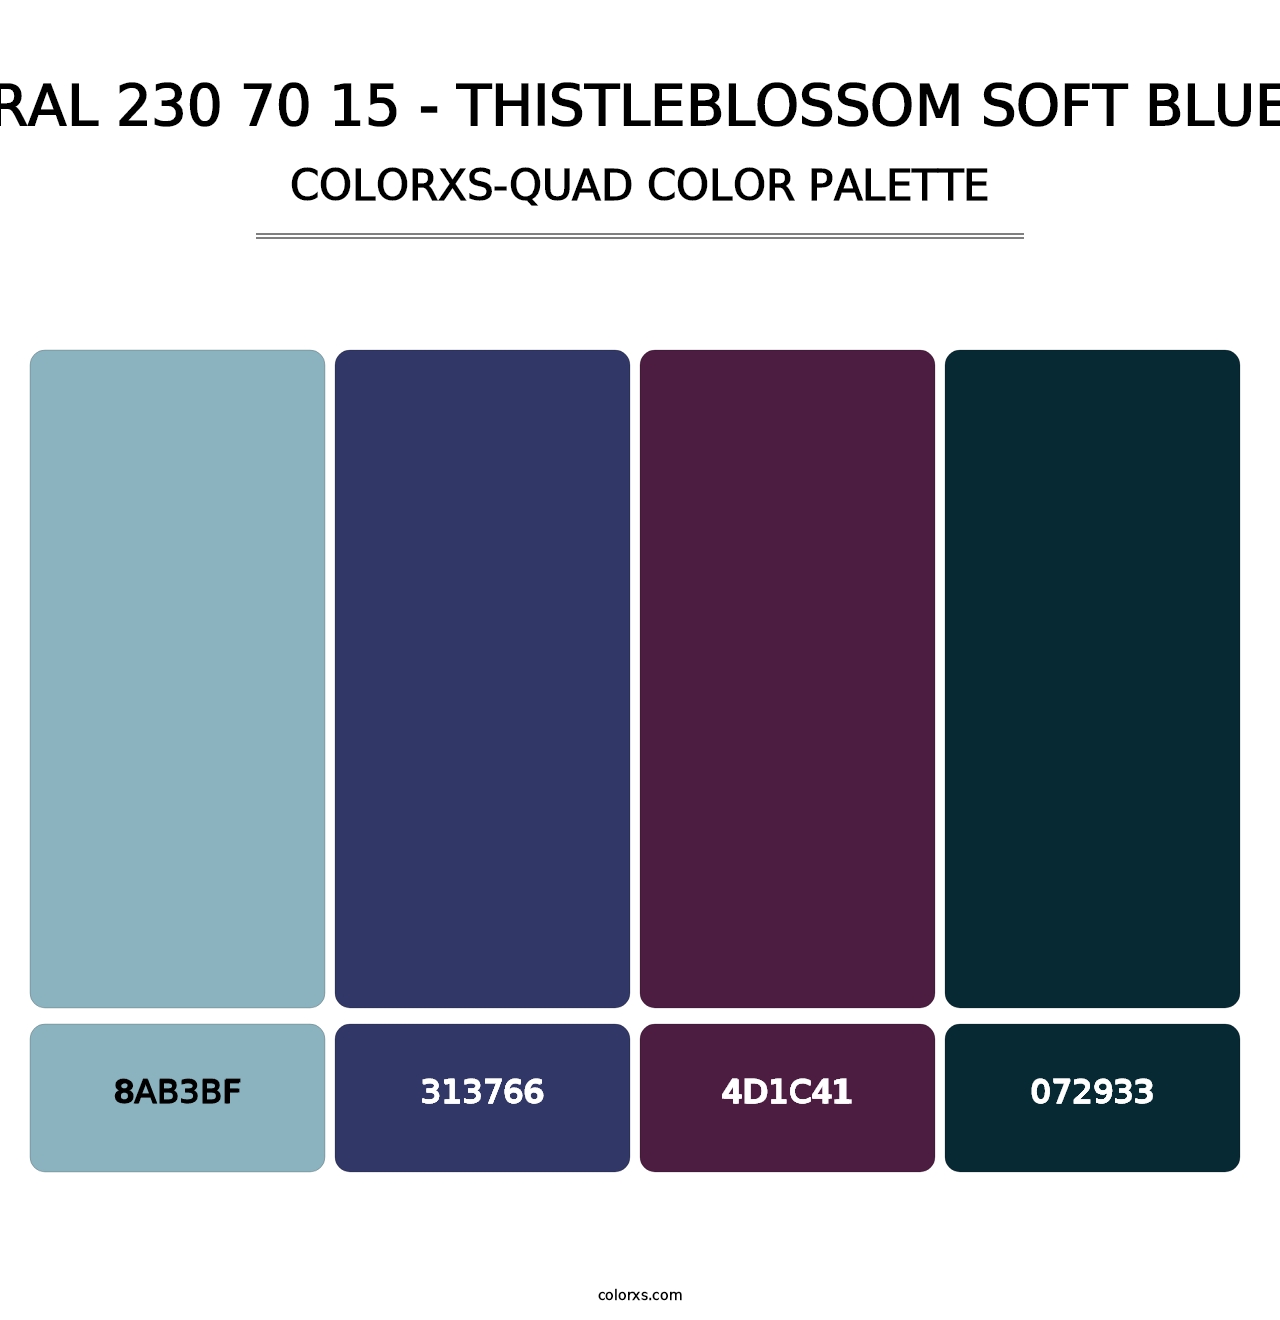 RAL 230 70 15 - Thistleblossom Soft Blue - Colorxs Quad Palette